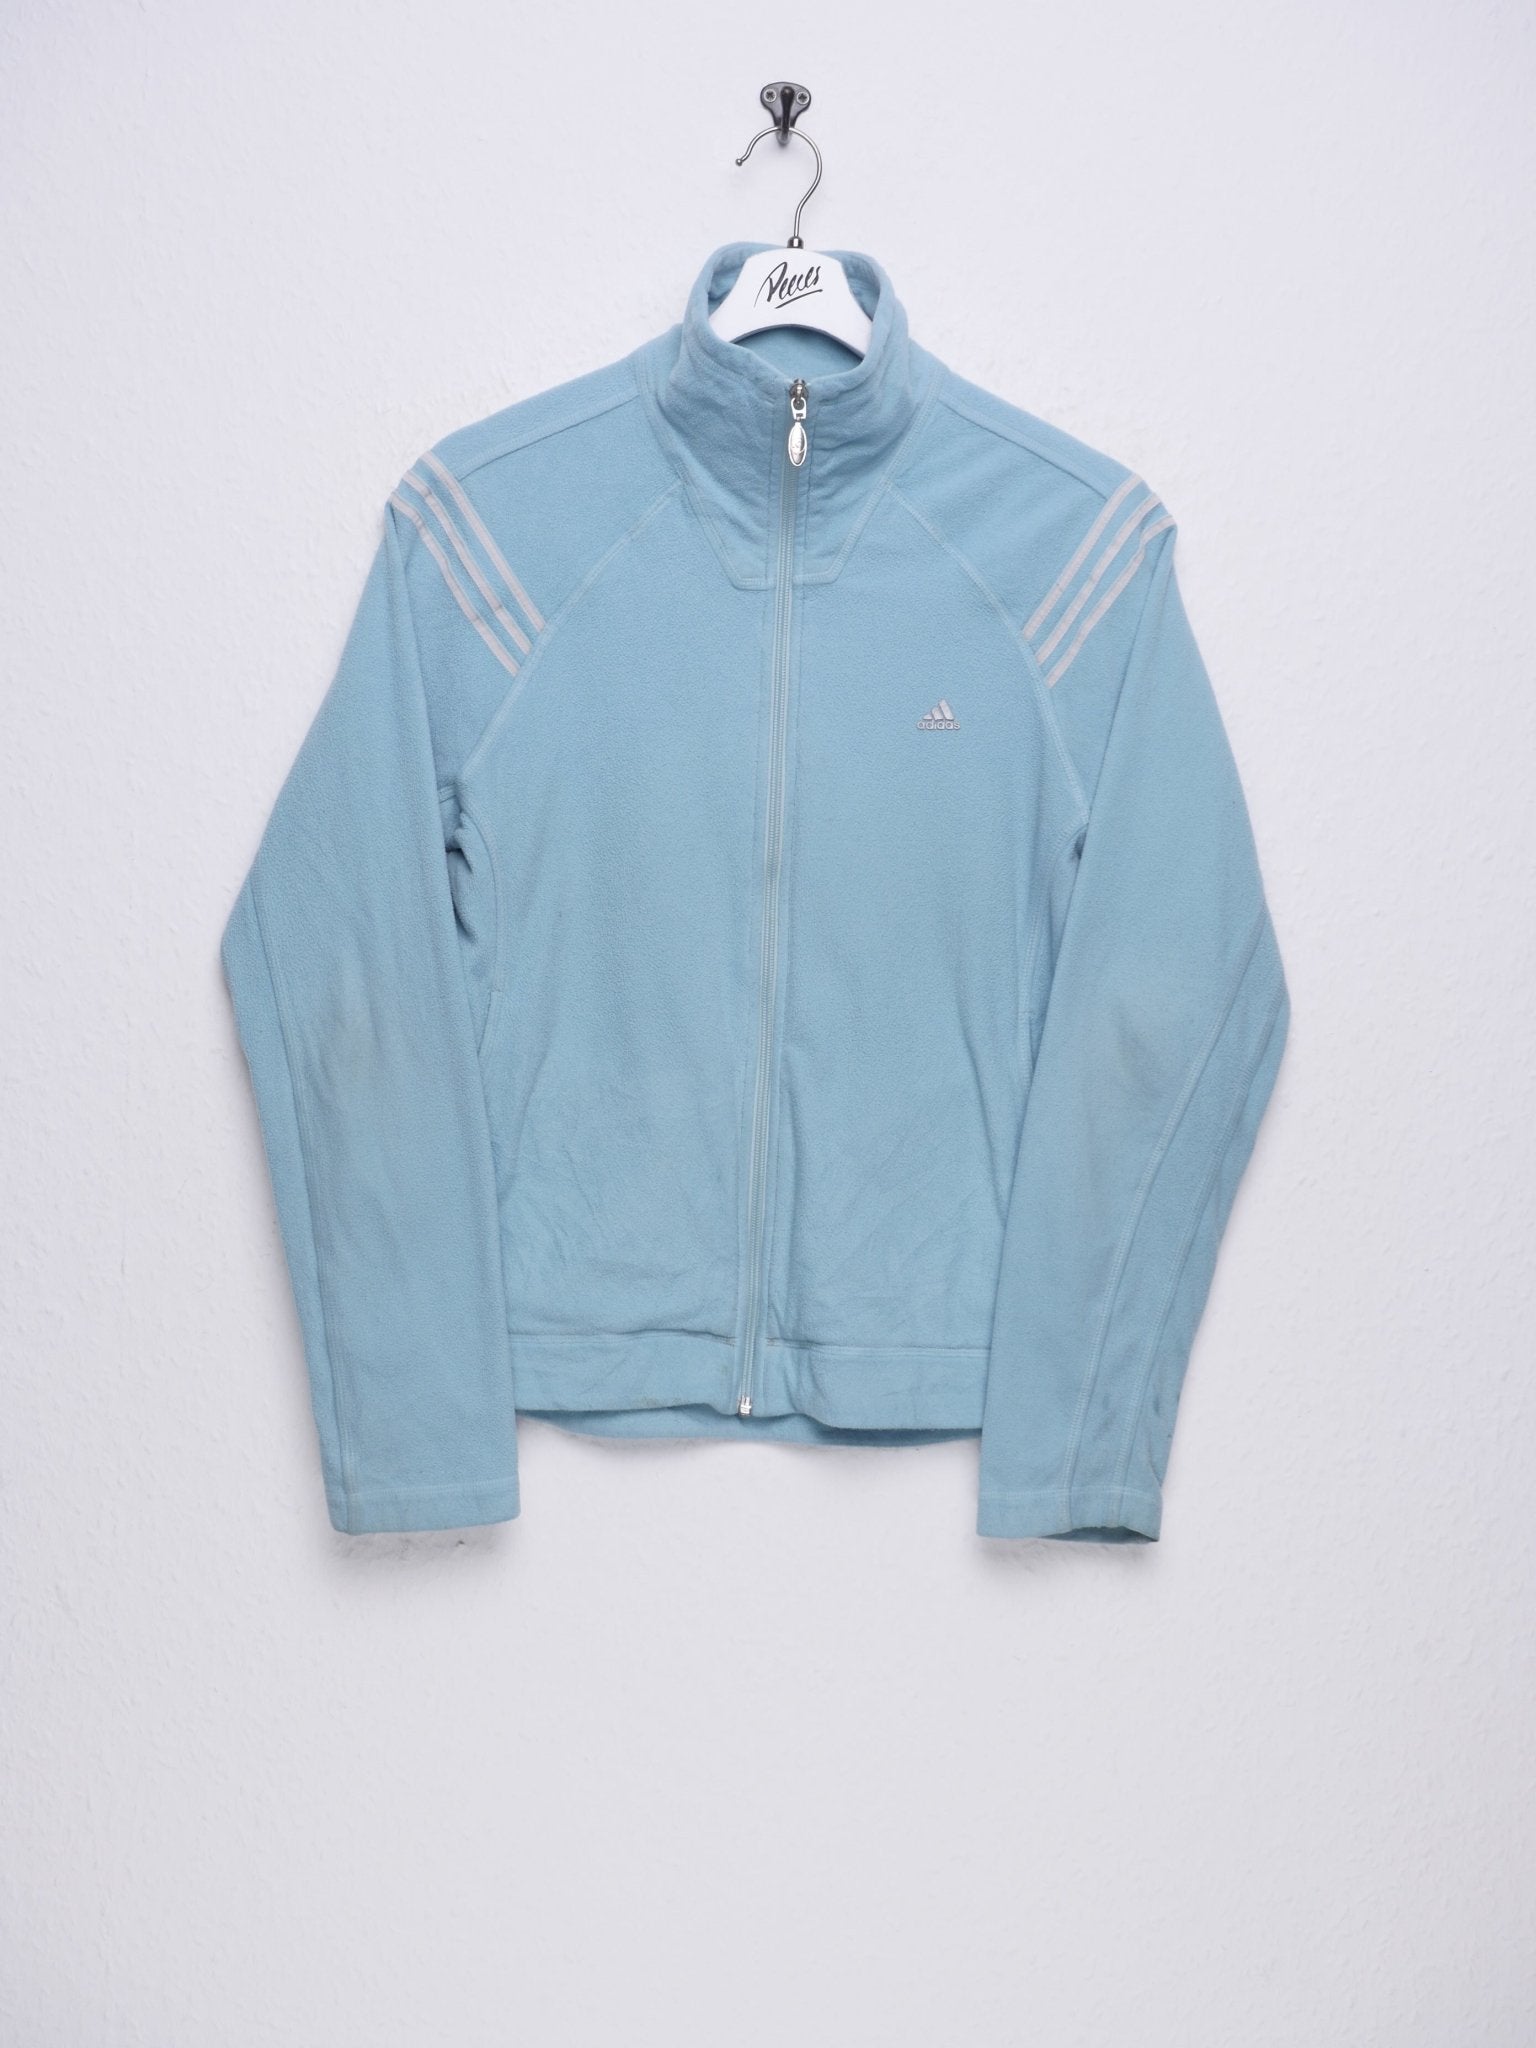 Adidas printed Logo blue Fleece Zip Sweater - Peeces